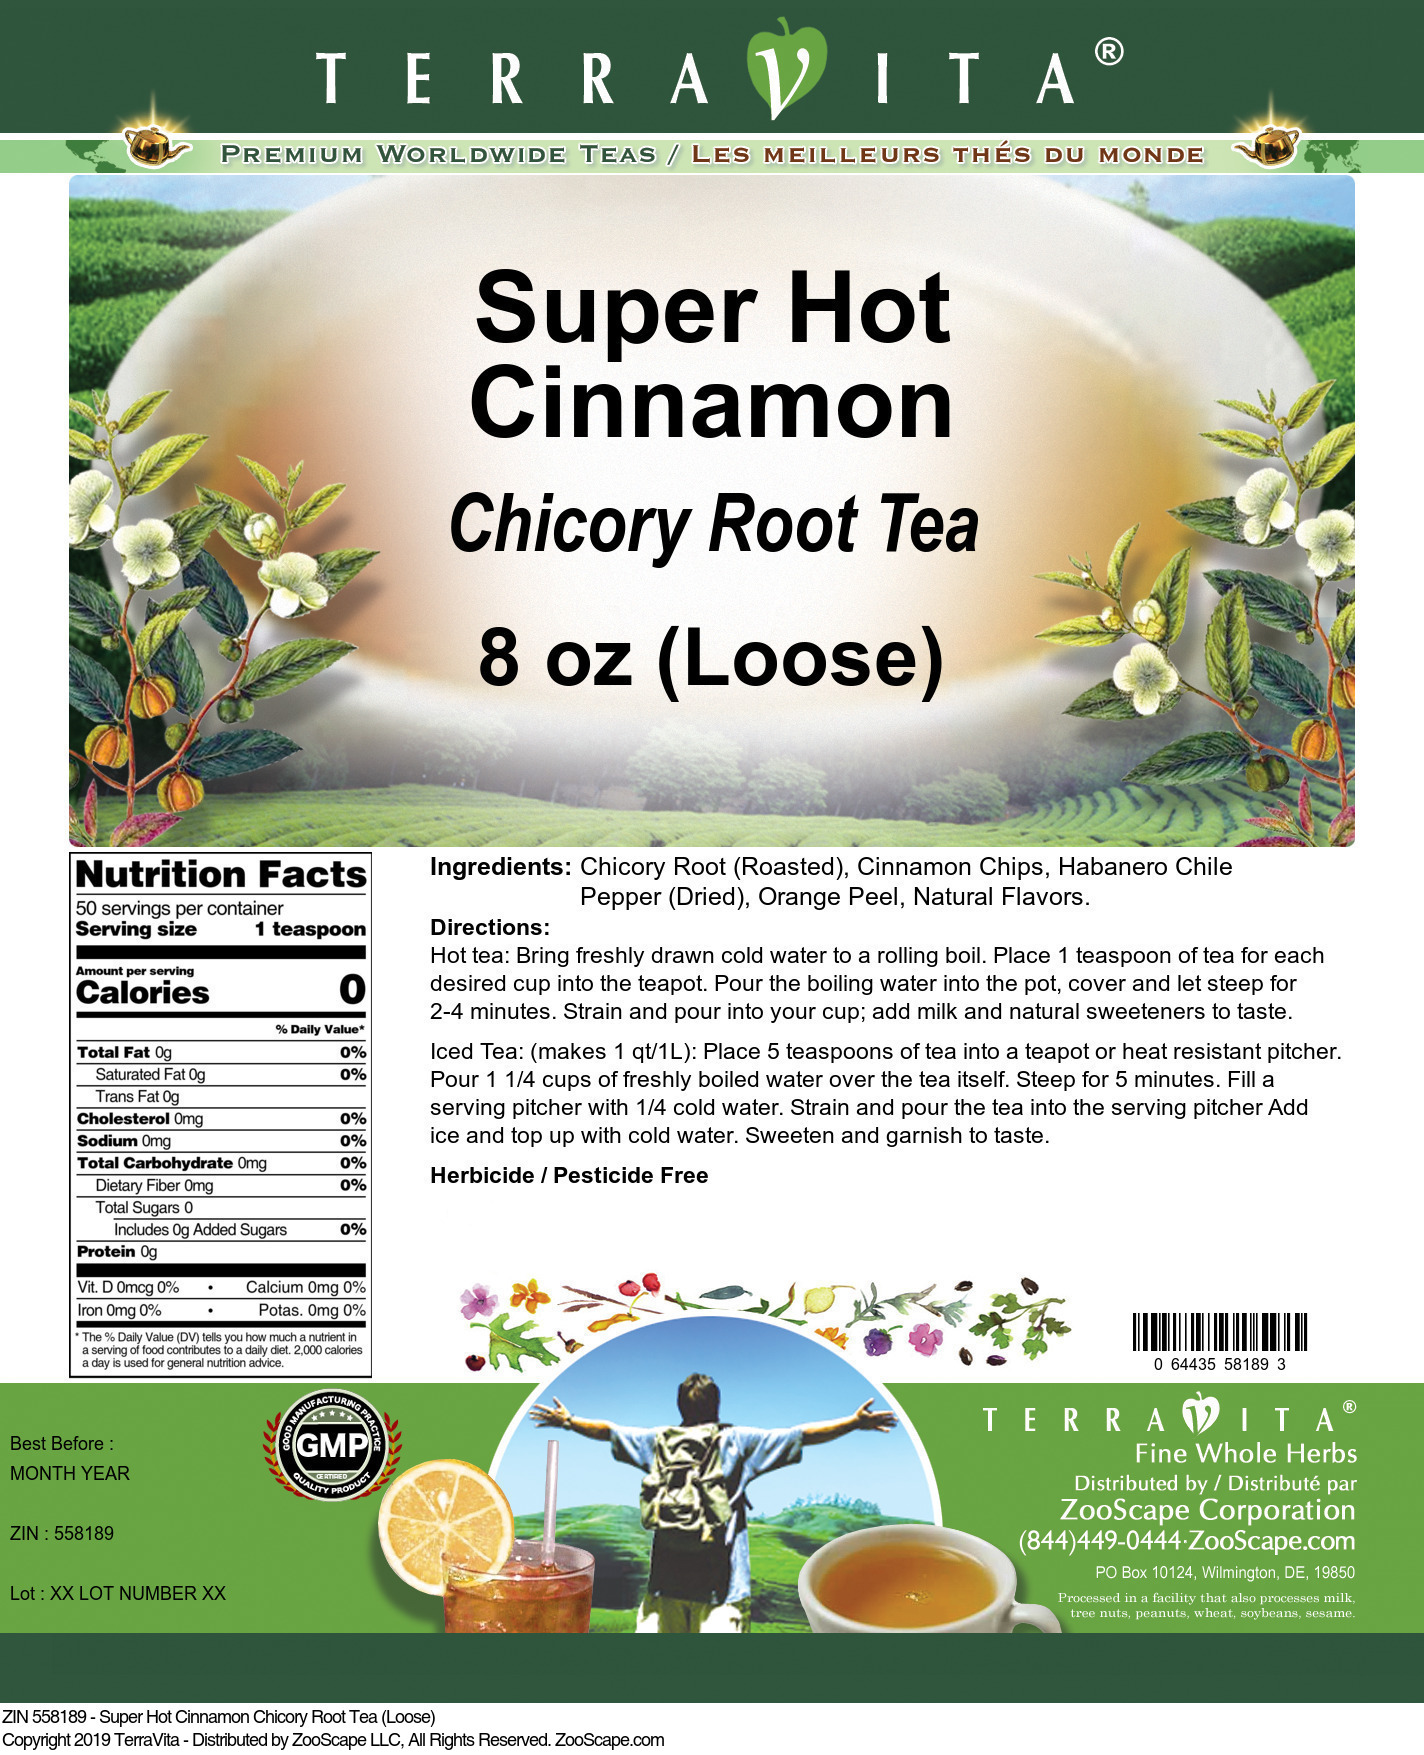 Super Hot Cinnamon Chicory Root Tea (Loose) - Label